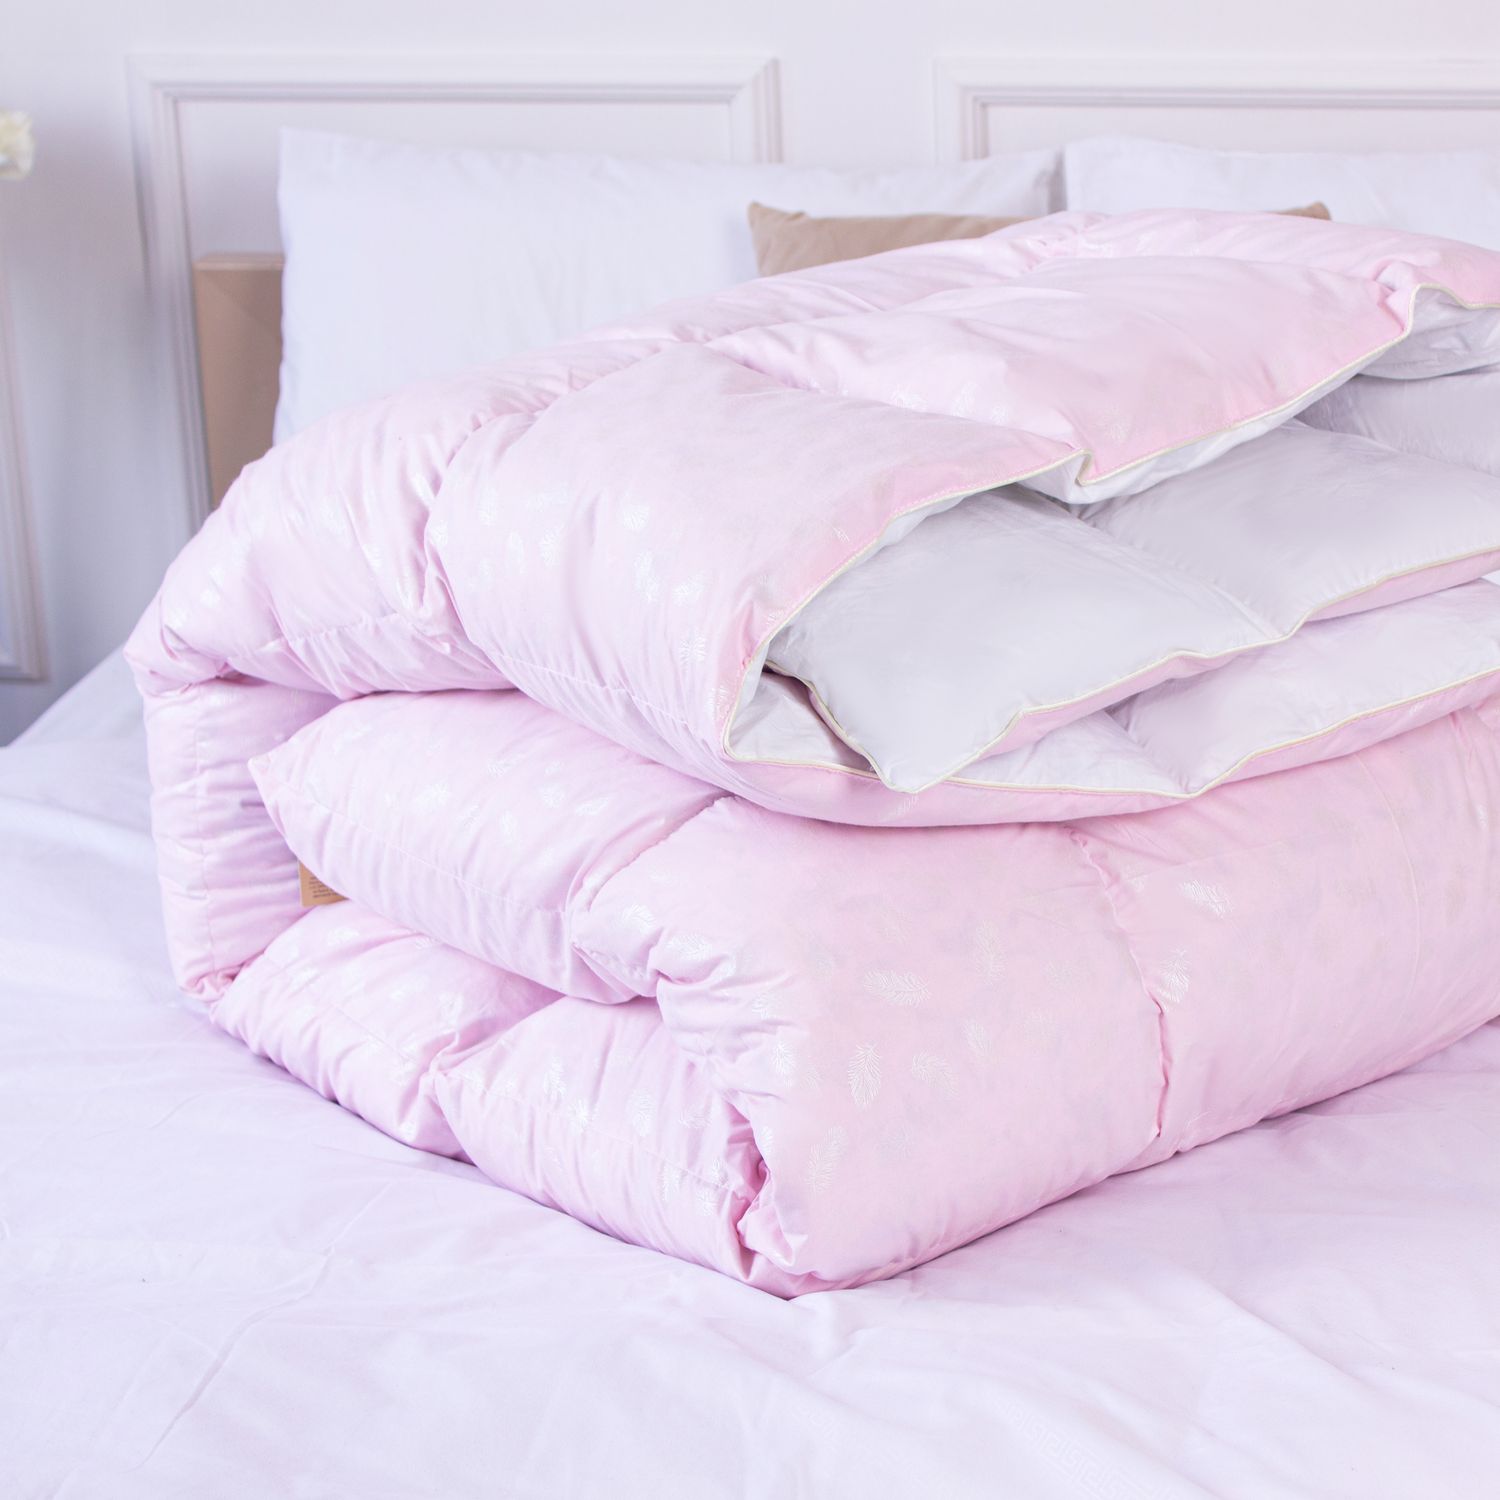 Одеяло пуховое MirSon Karmen №1862 Bio-Pink, 50% пух, двуспальное, 205x172, розовое (2200003014914) - фото 3